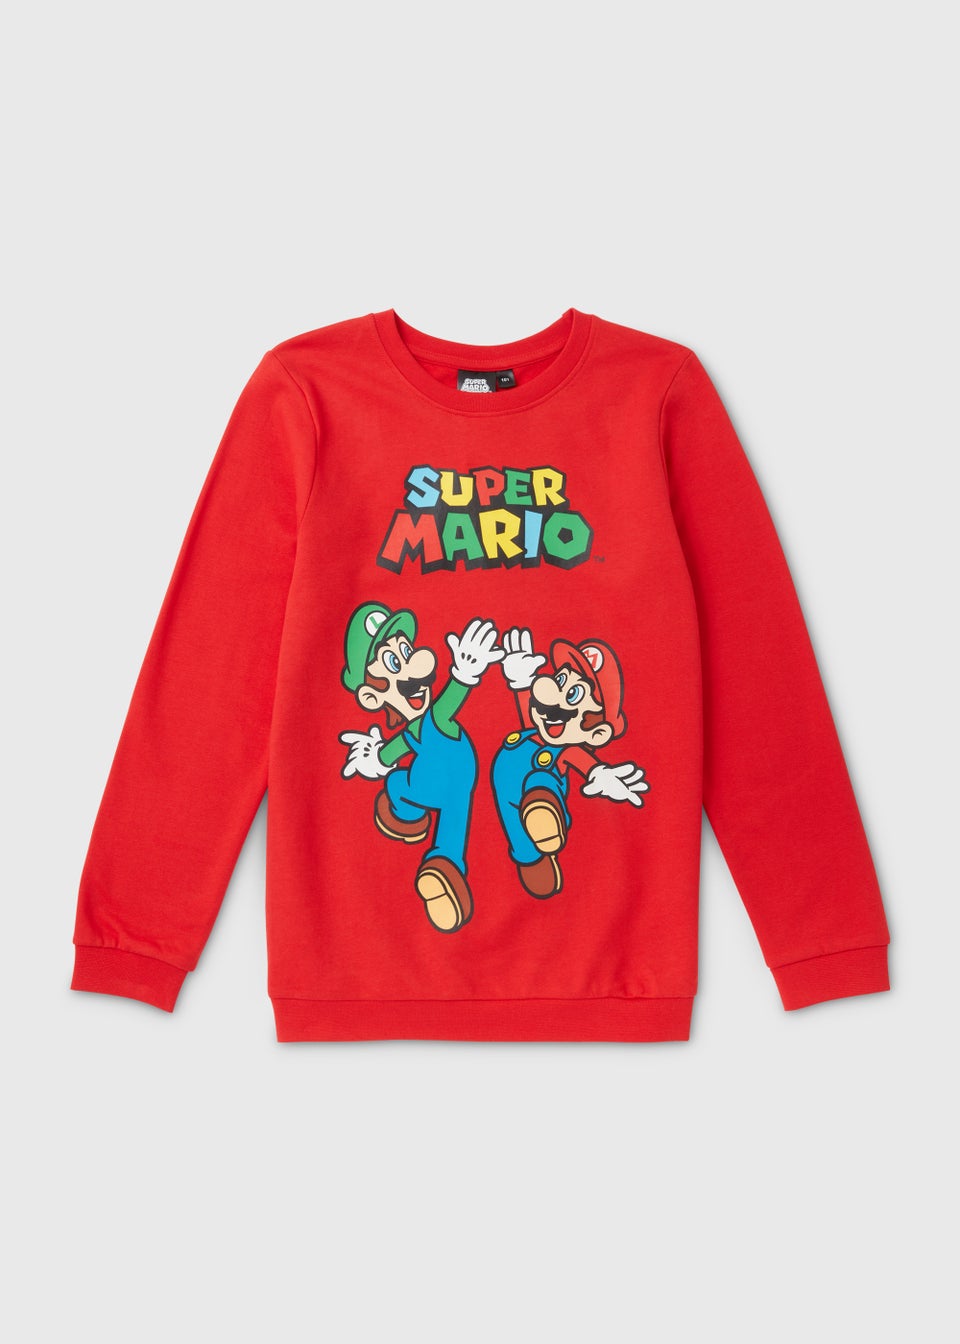 Mario Red Sweatshirt